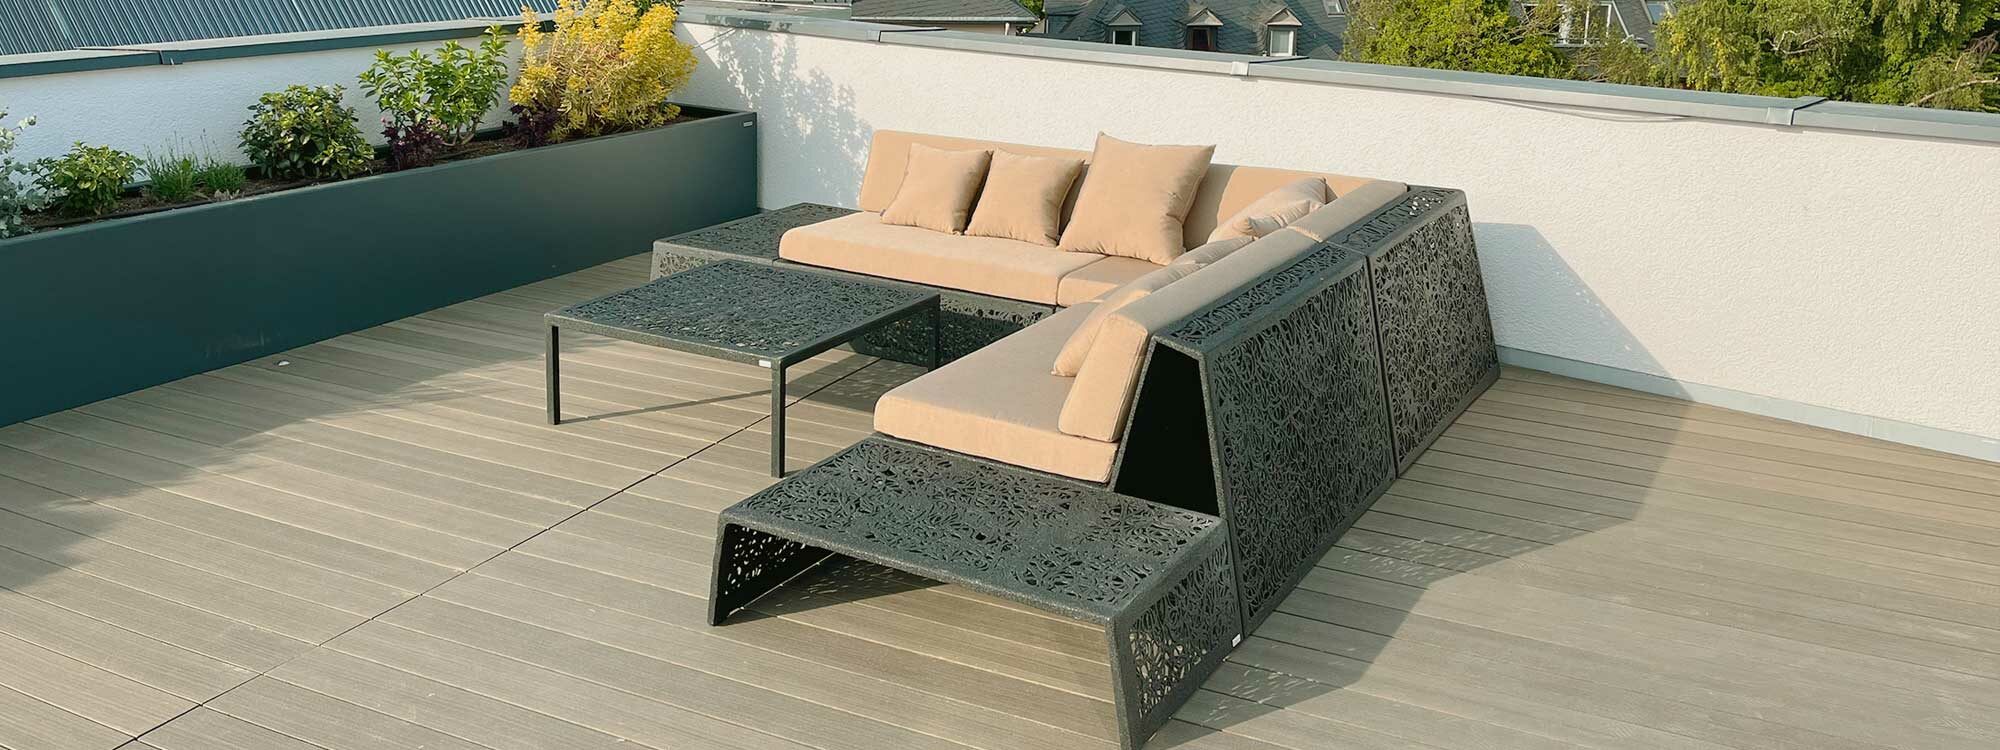 Image of Unknown Furniture's Bios black outdoor corner sofa in basalt fibre & epoxy resin